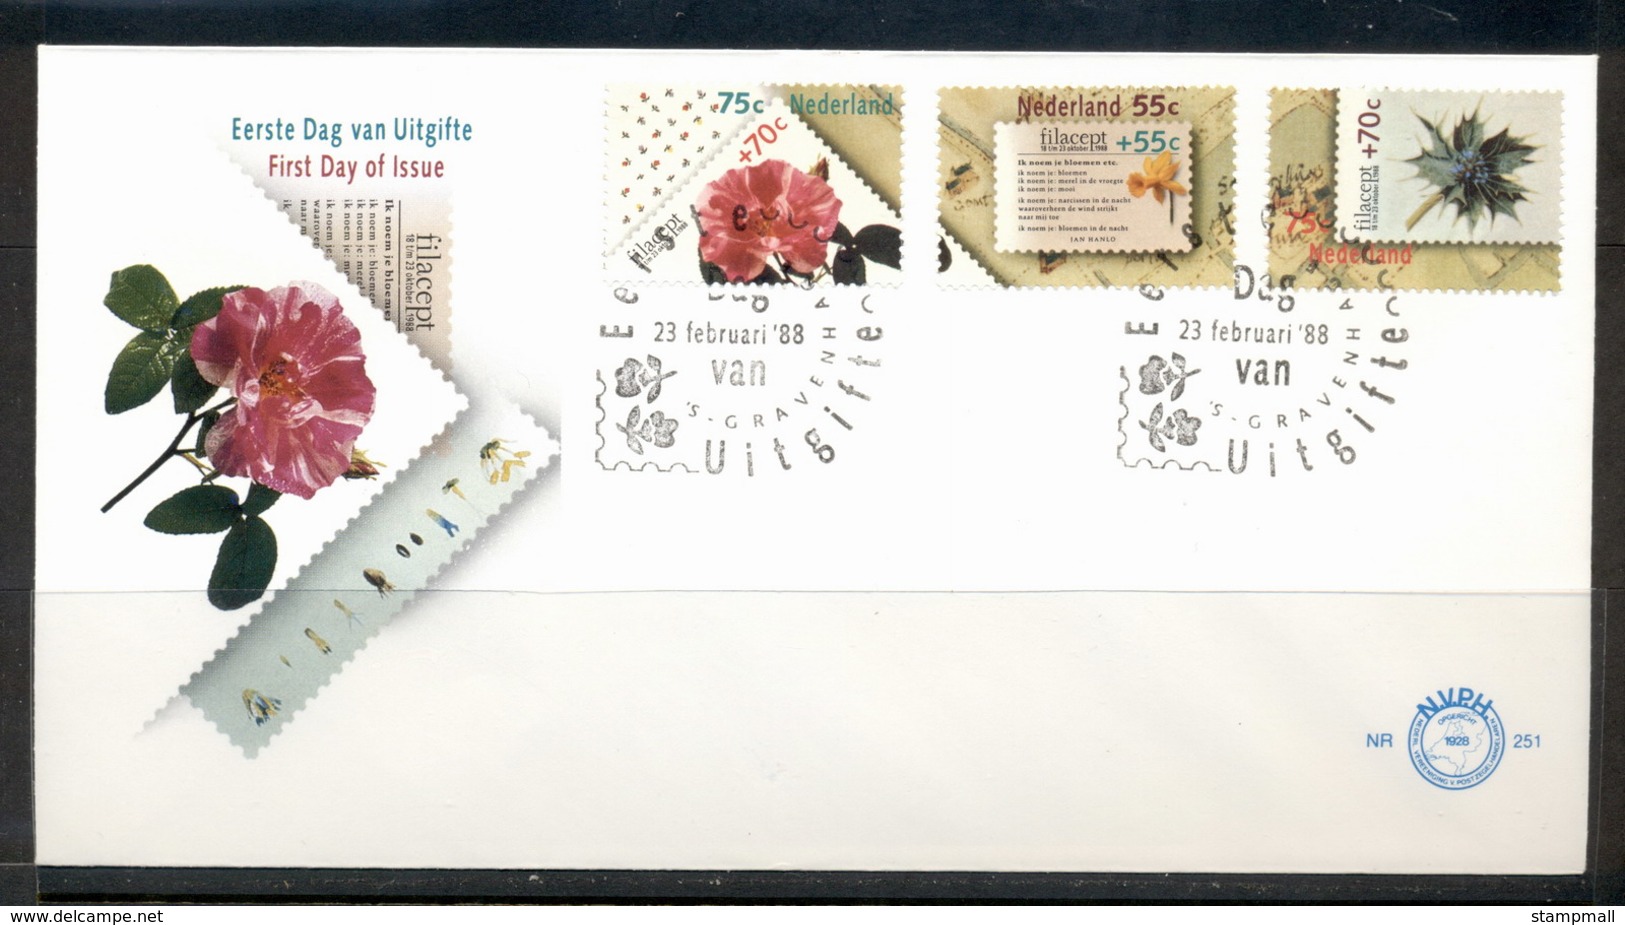 Netherlands 1988 Welfare, FILACEPT Stamp Ex. FDC - FDC